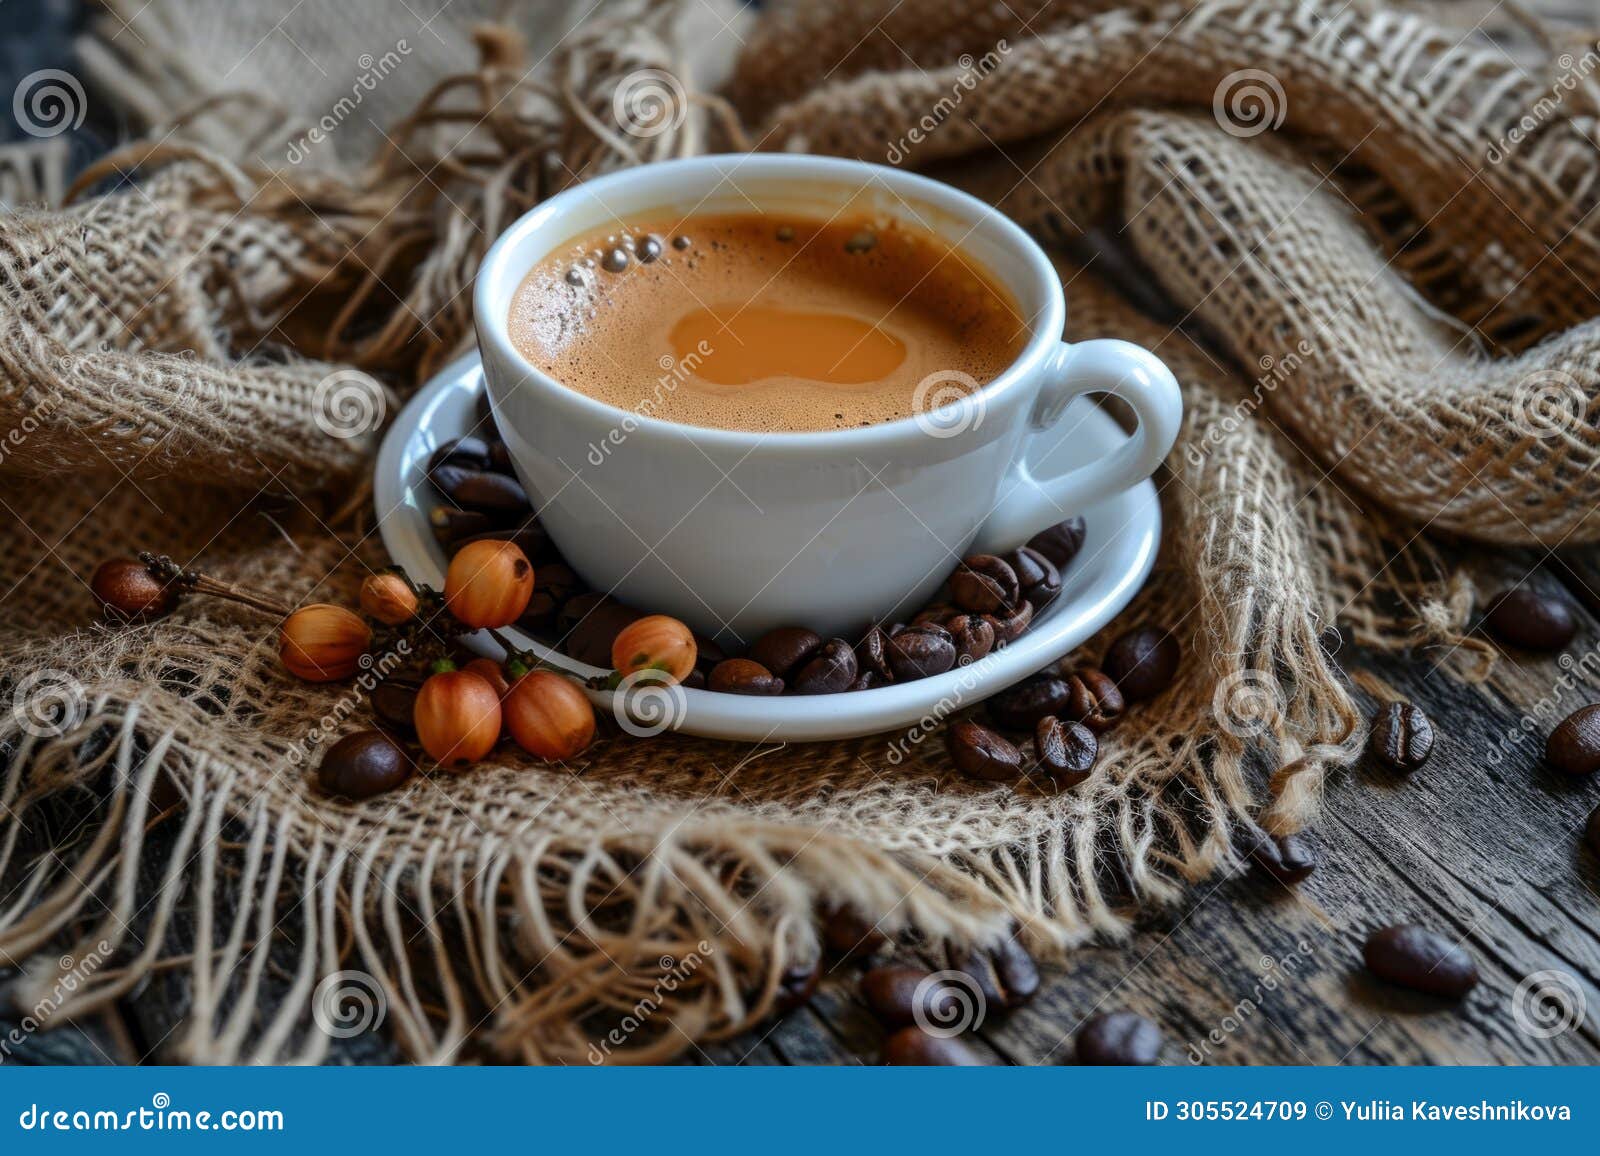 cup of specialty coffee beans cafe mug fresh spicy juicy sweet brazil caffeine decaf americano espresso with milk cream